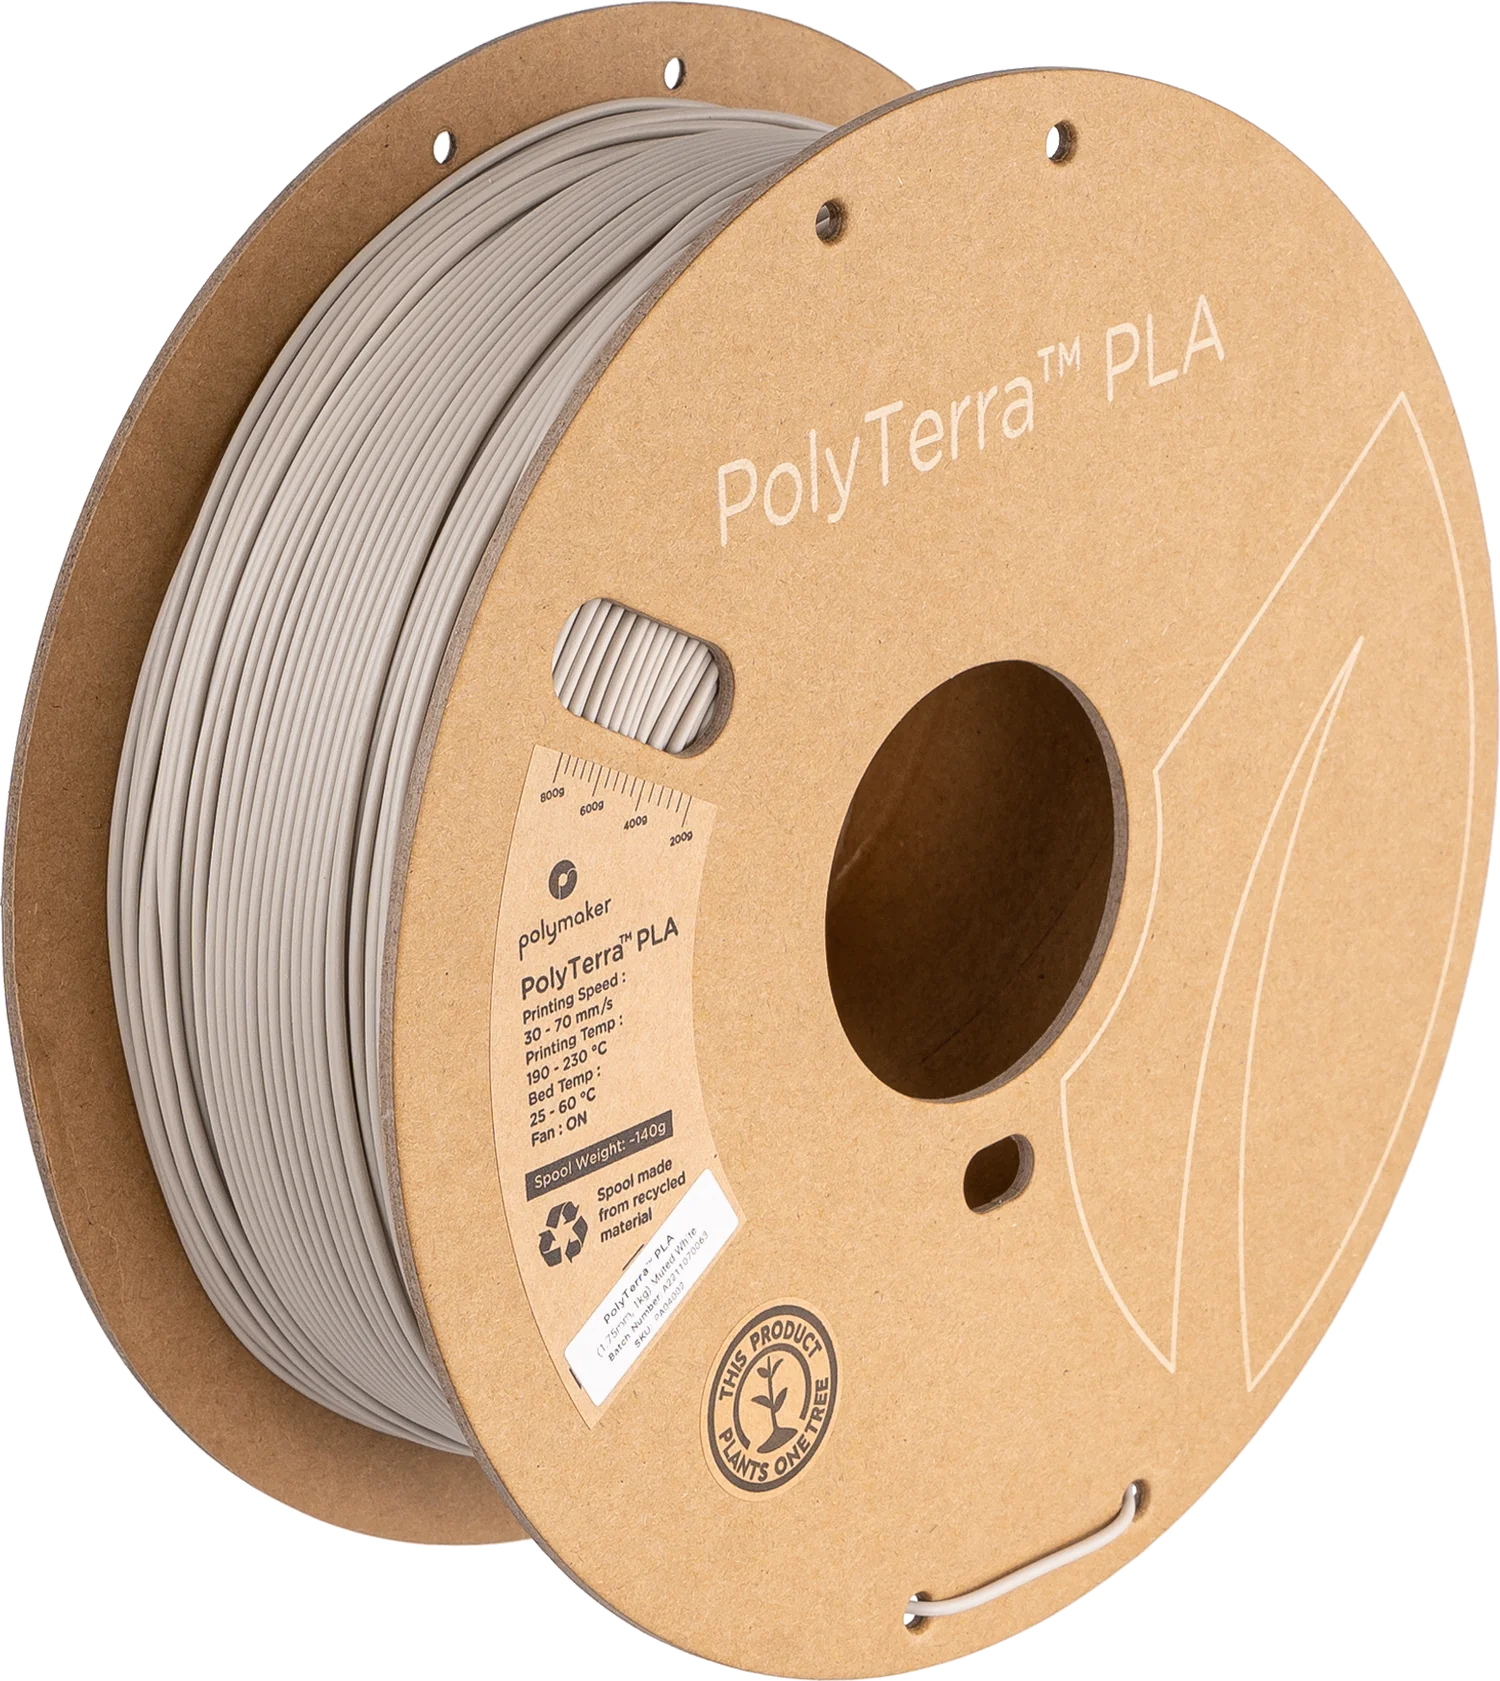 Polymaker PolyTerra PLA - Muted White